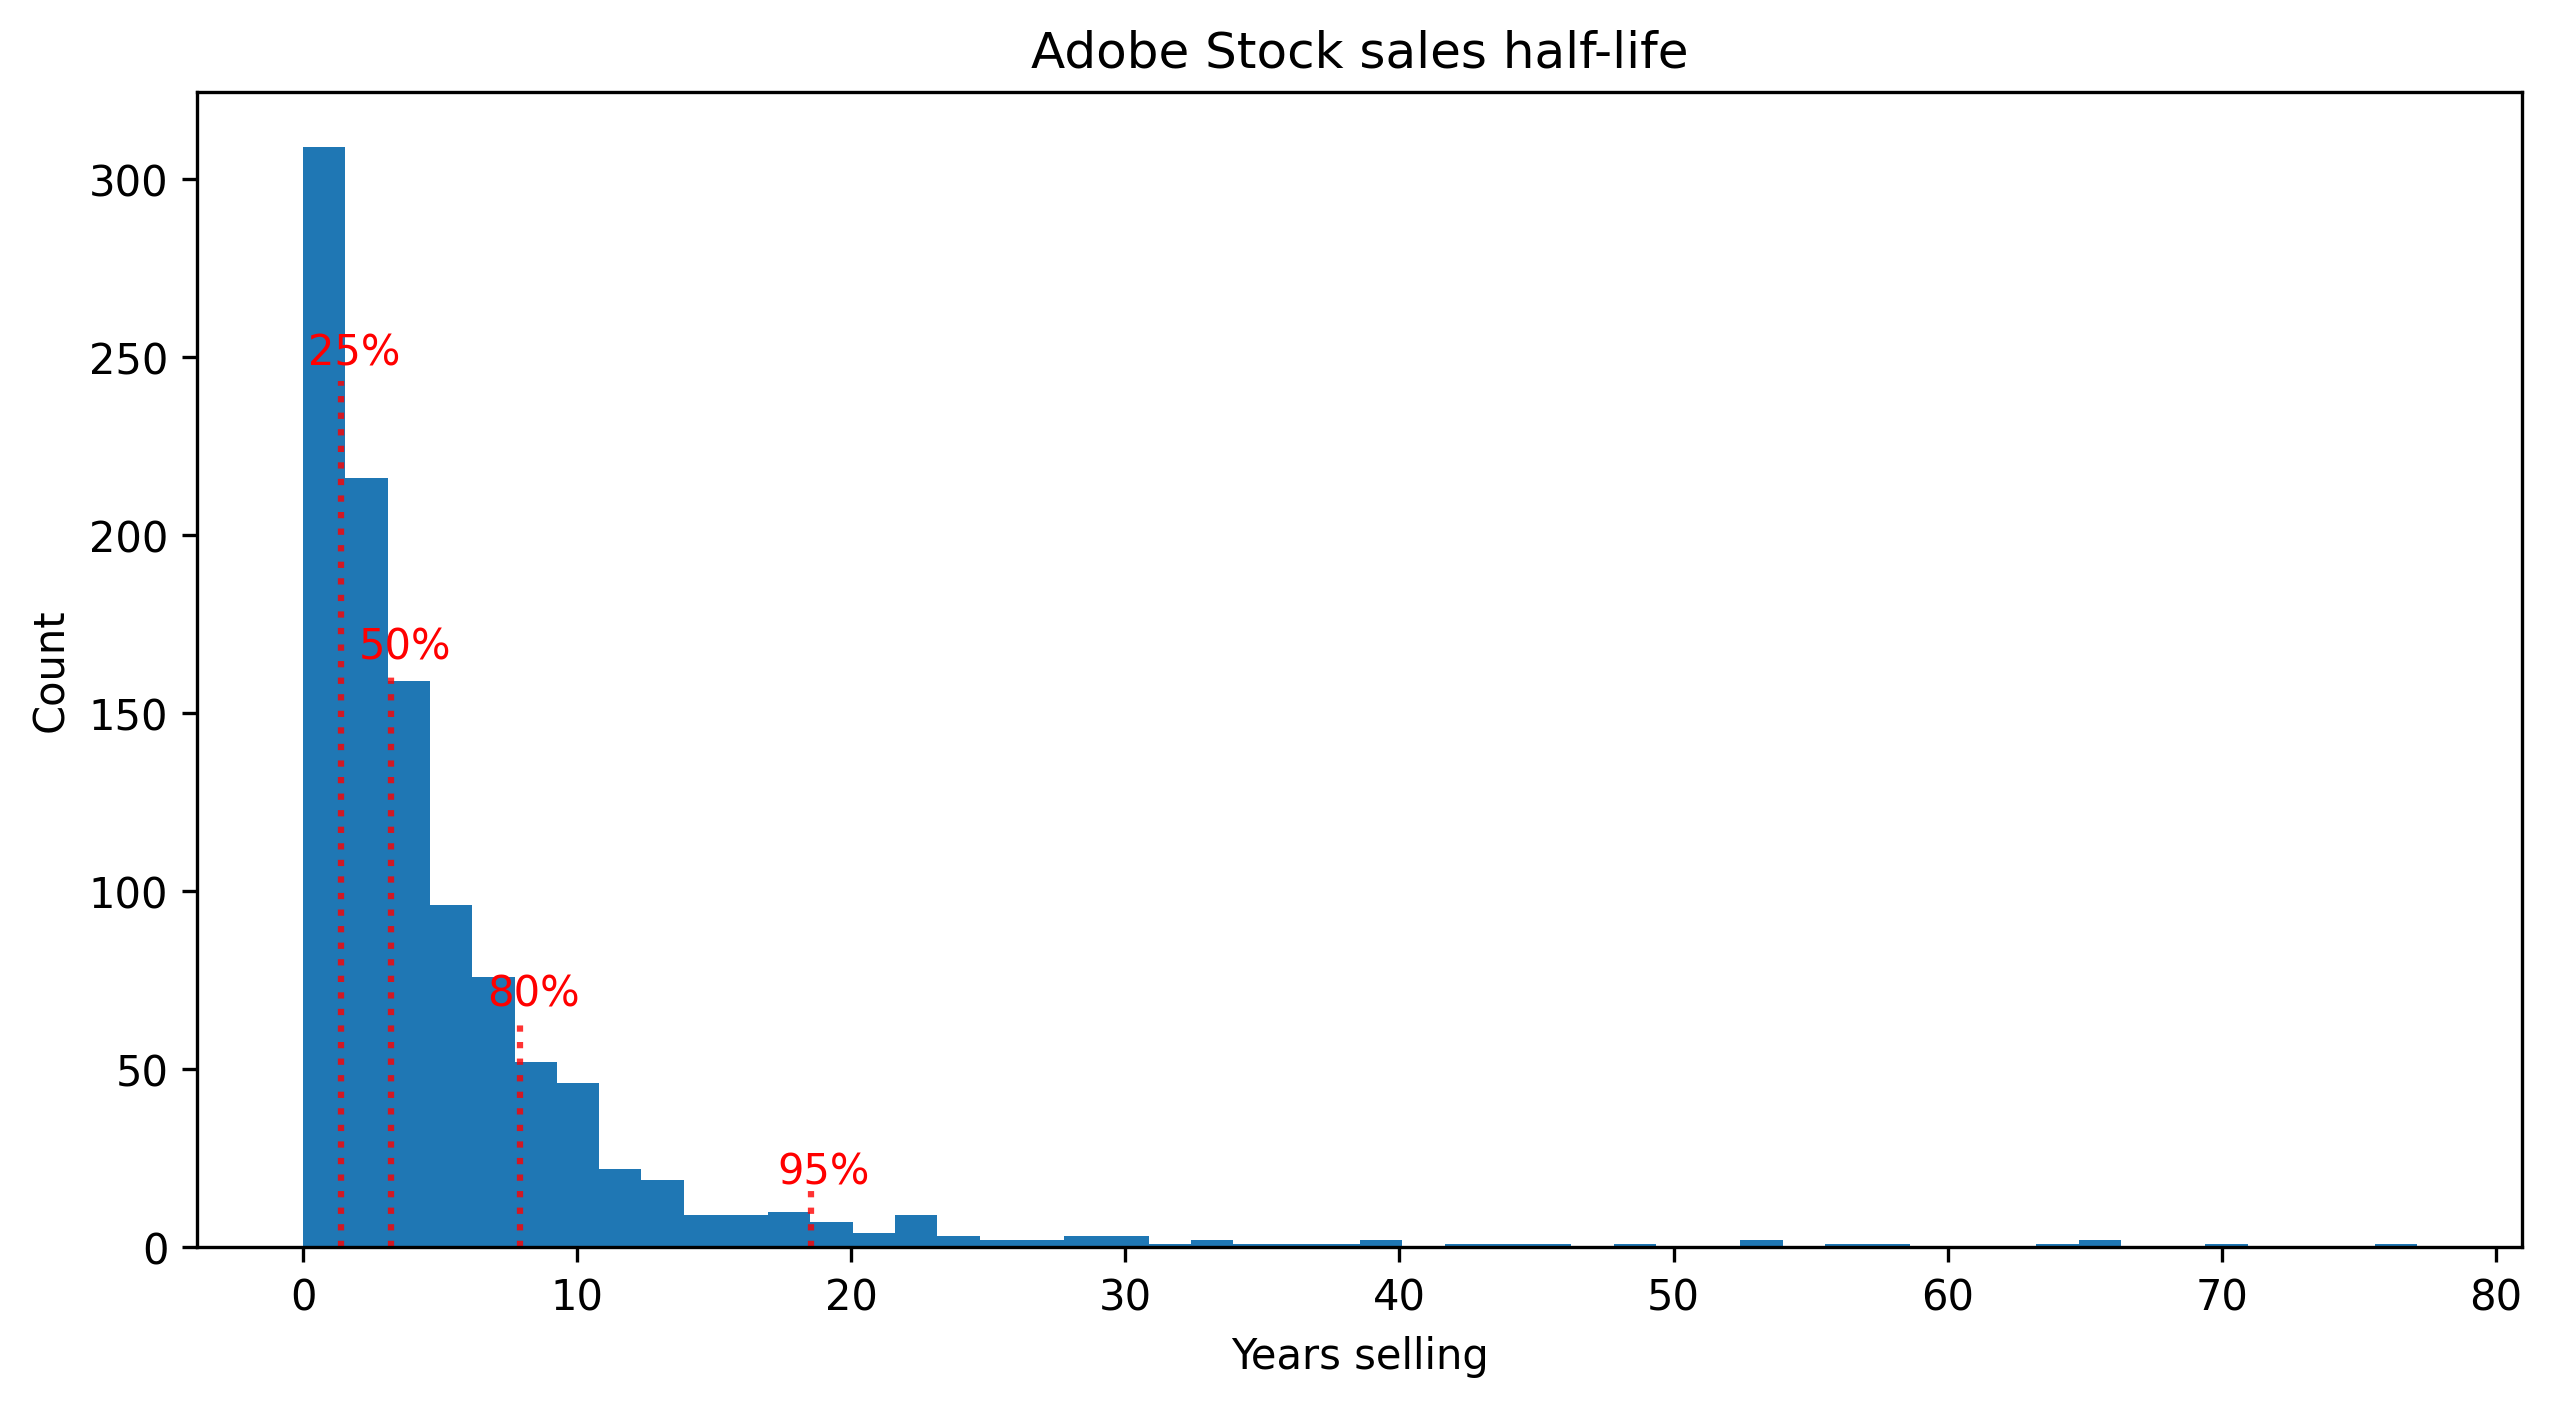 Adobe Stock half-life